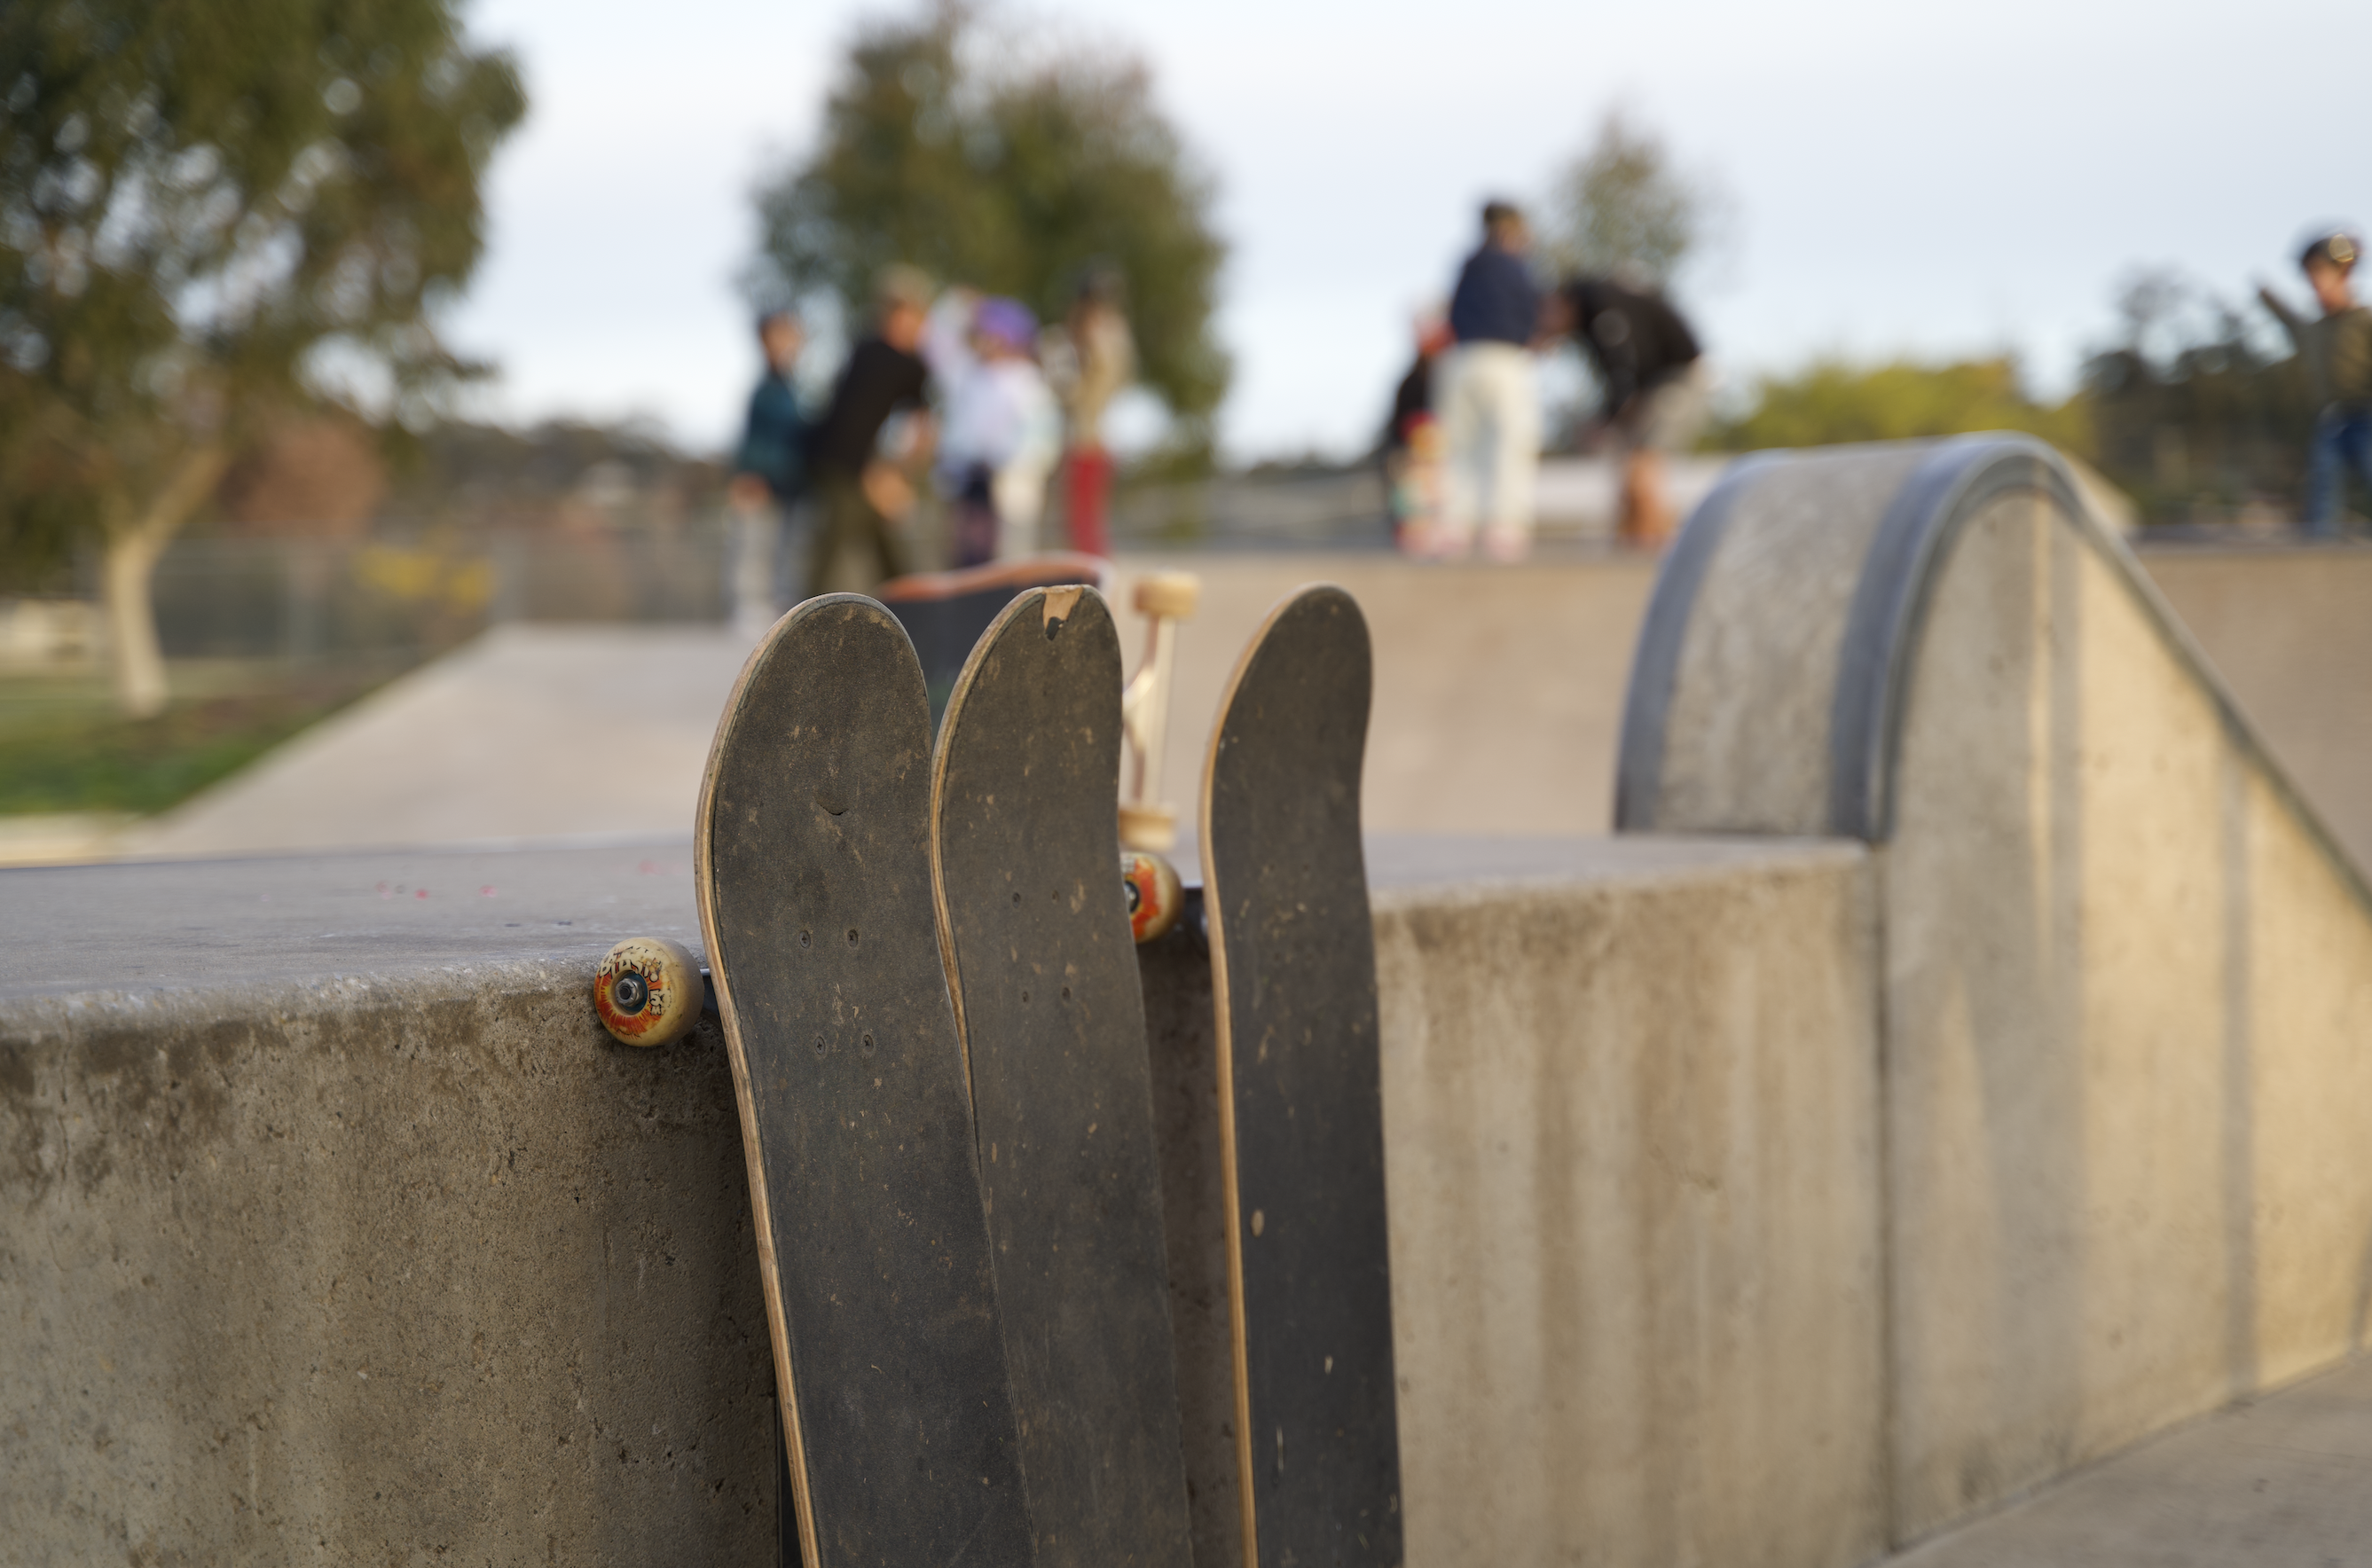 Skateboards down at the skatepark